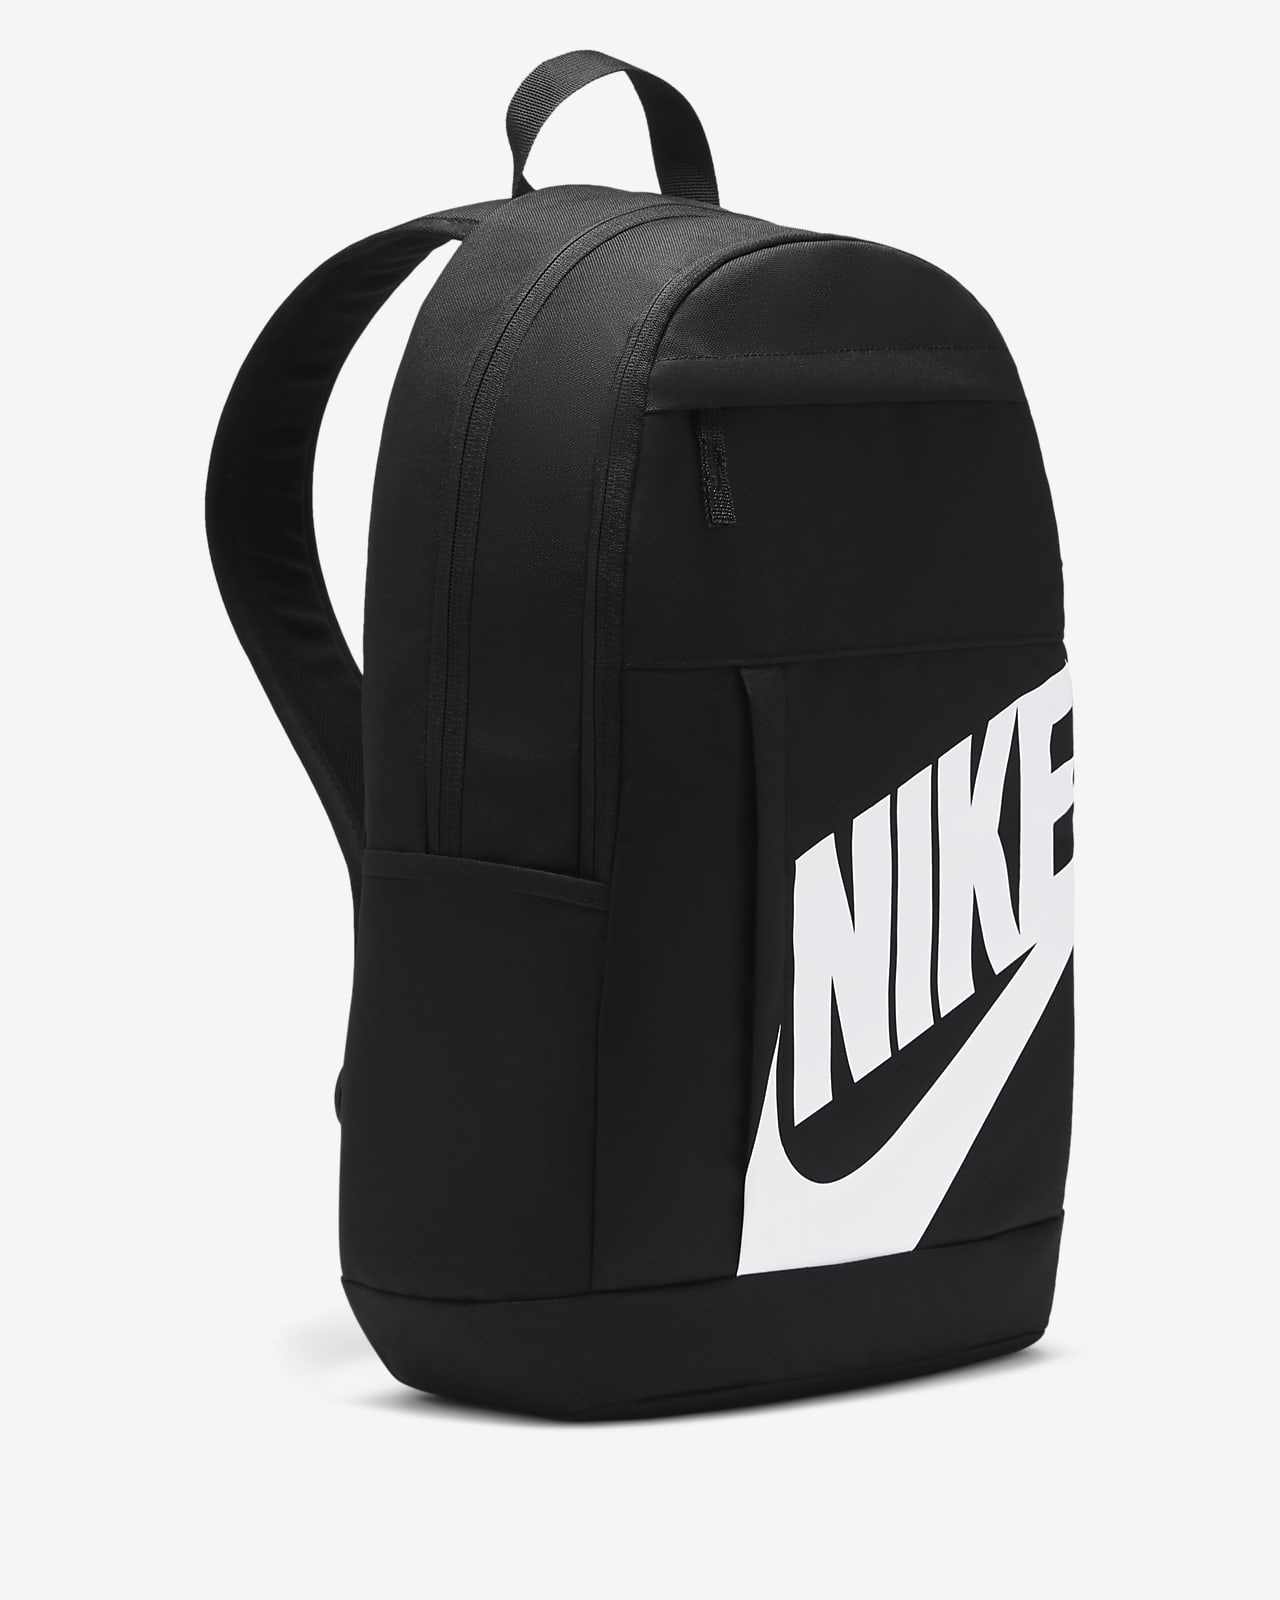 Buy > nike shoe backpack > in stock